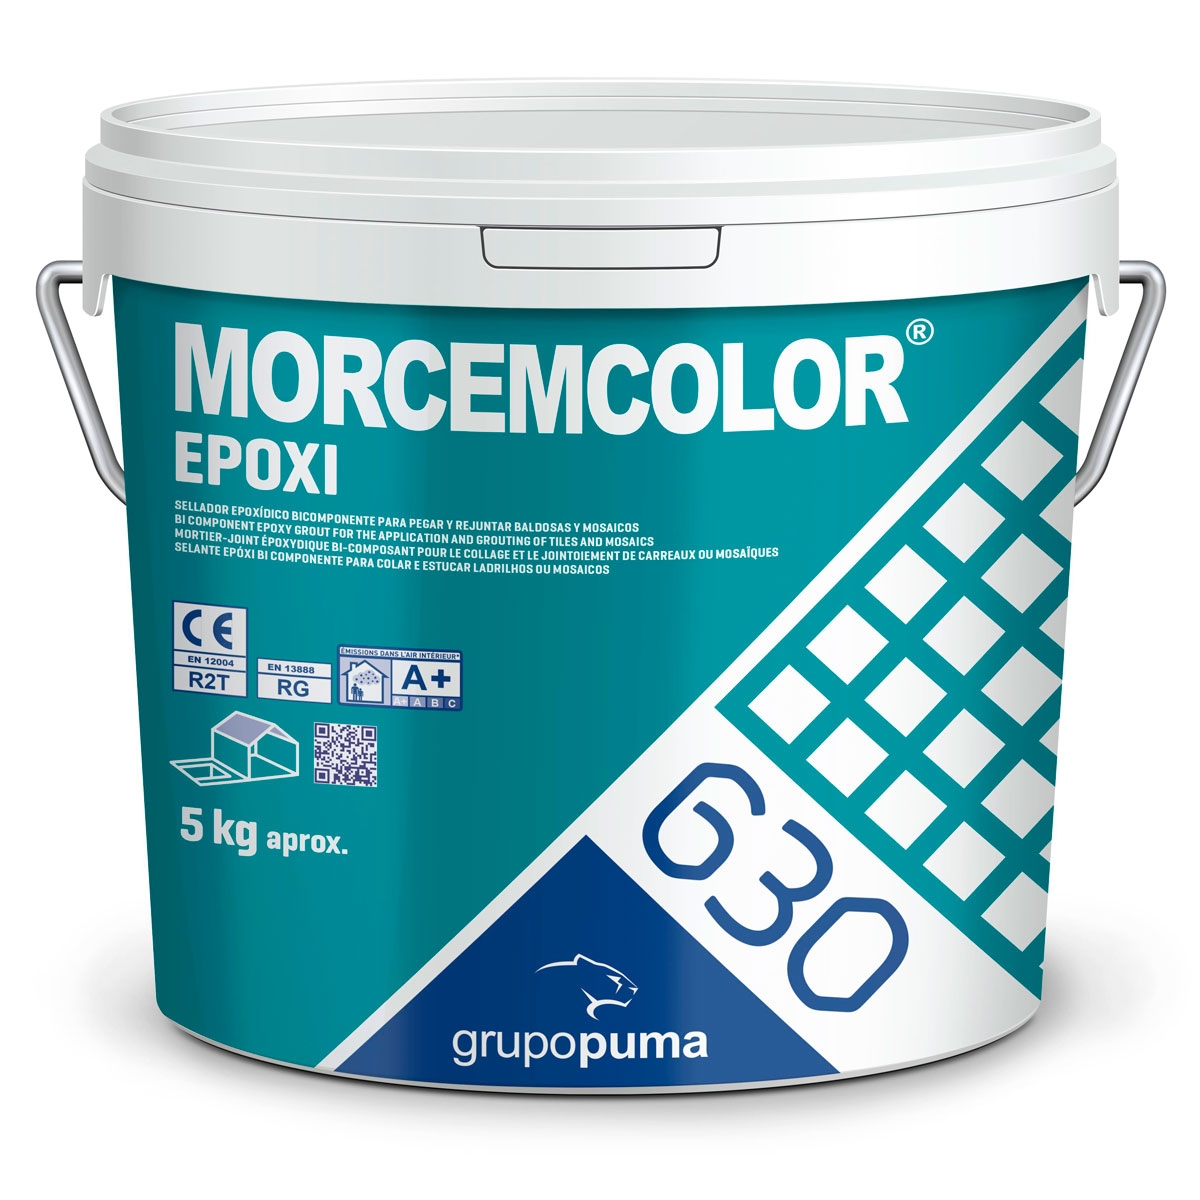 Morcemcolor Epoxy RG 5 Kg Cinzento EP157 - Puma Group